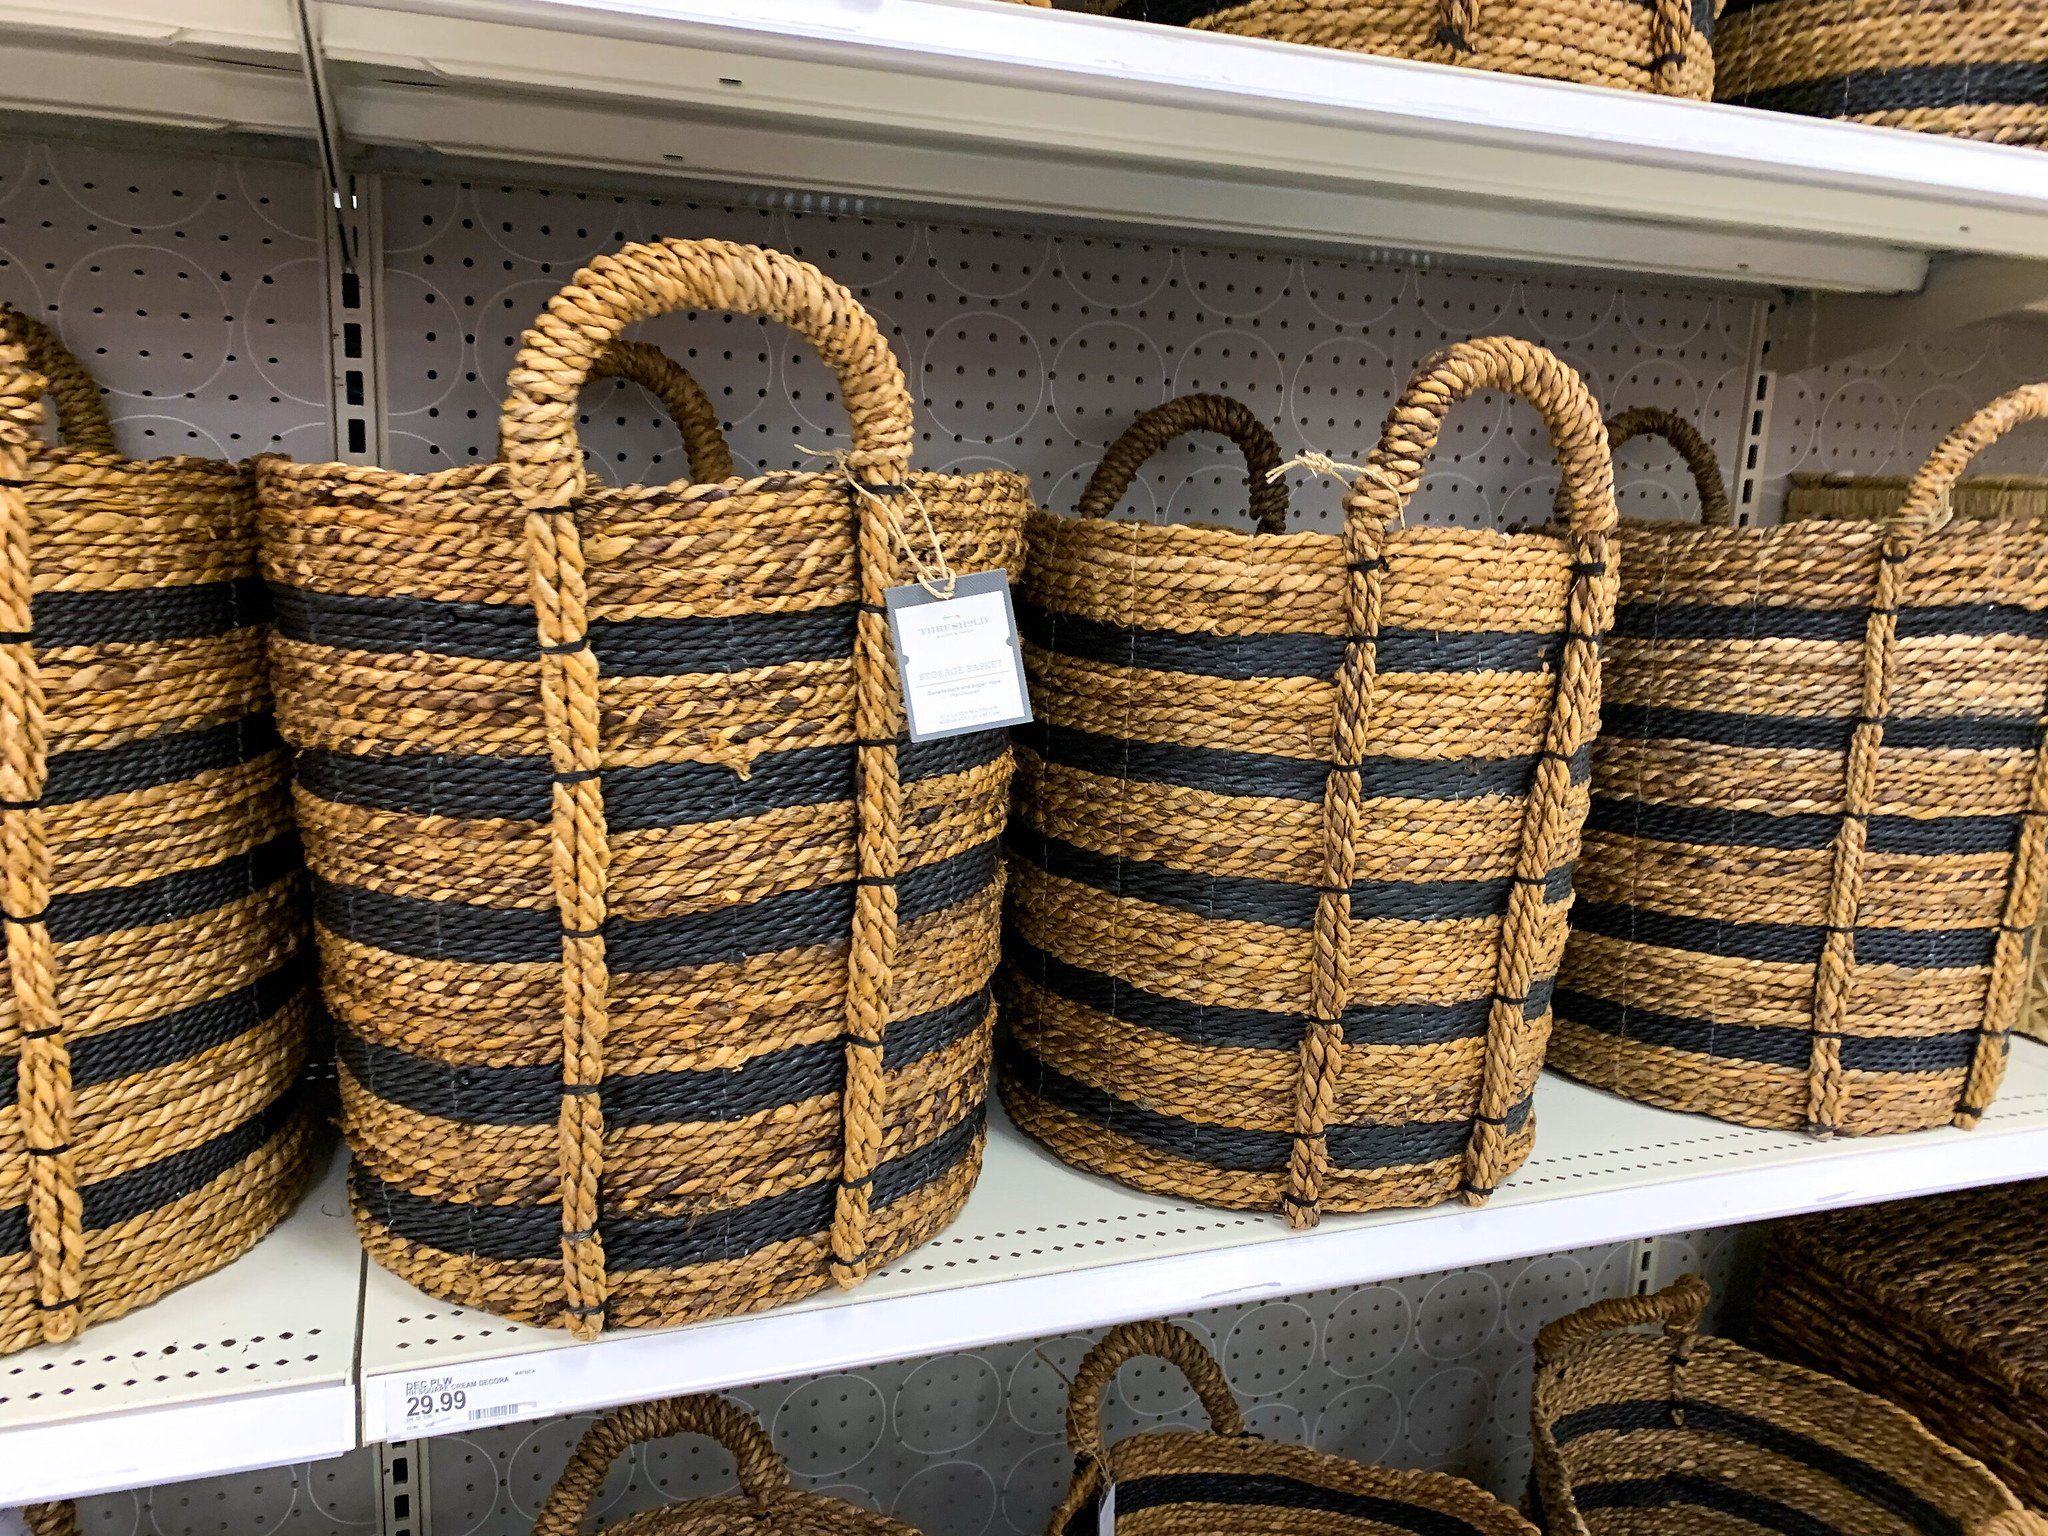 Target Storage Baskets on Sale - baskets in store